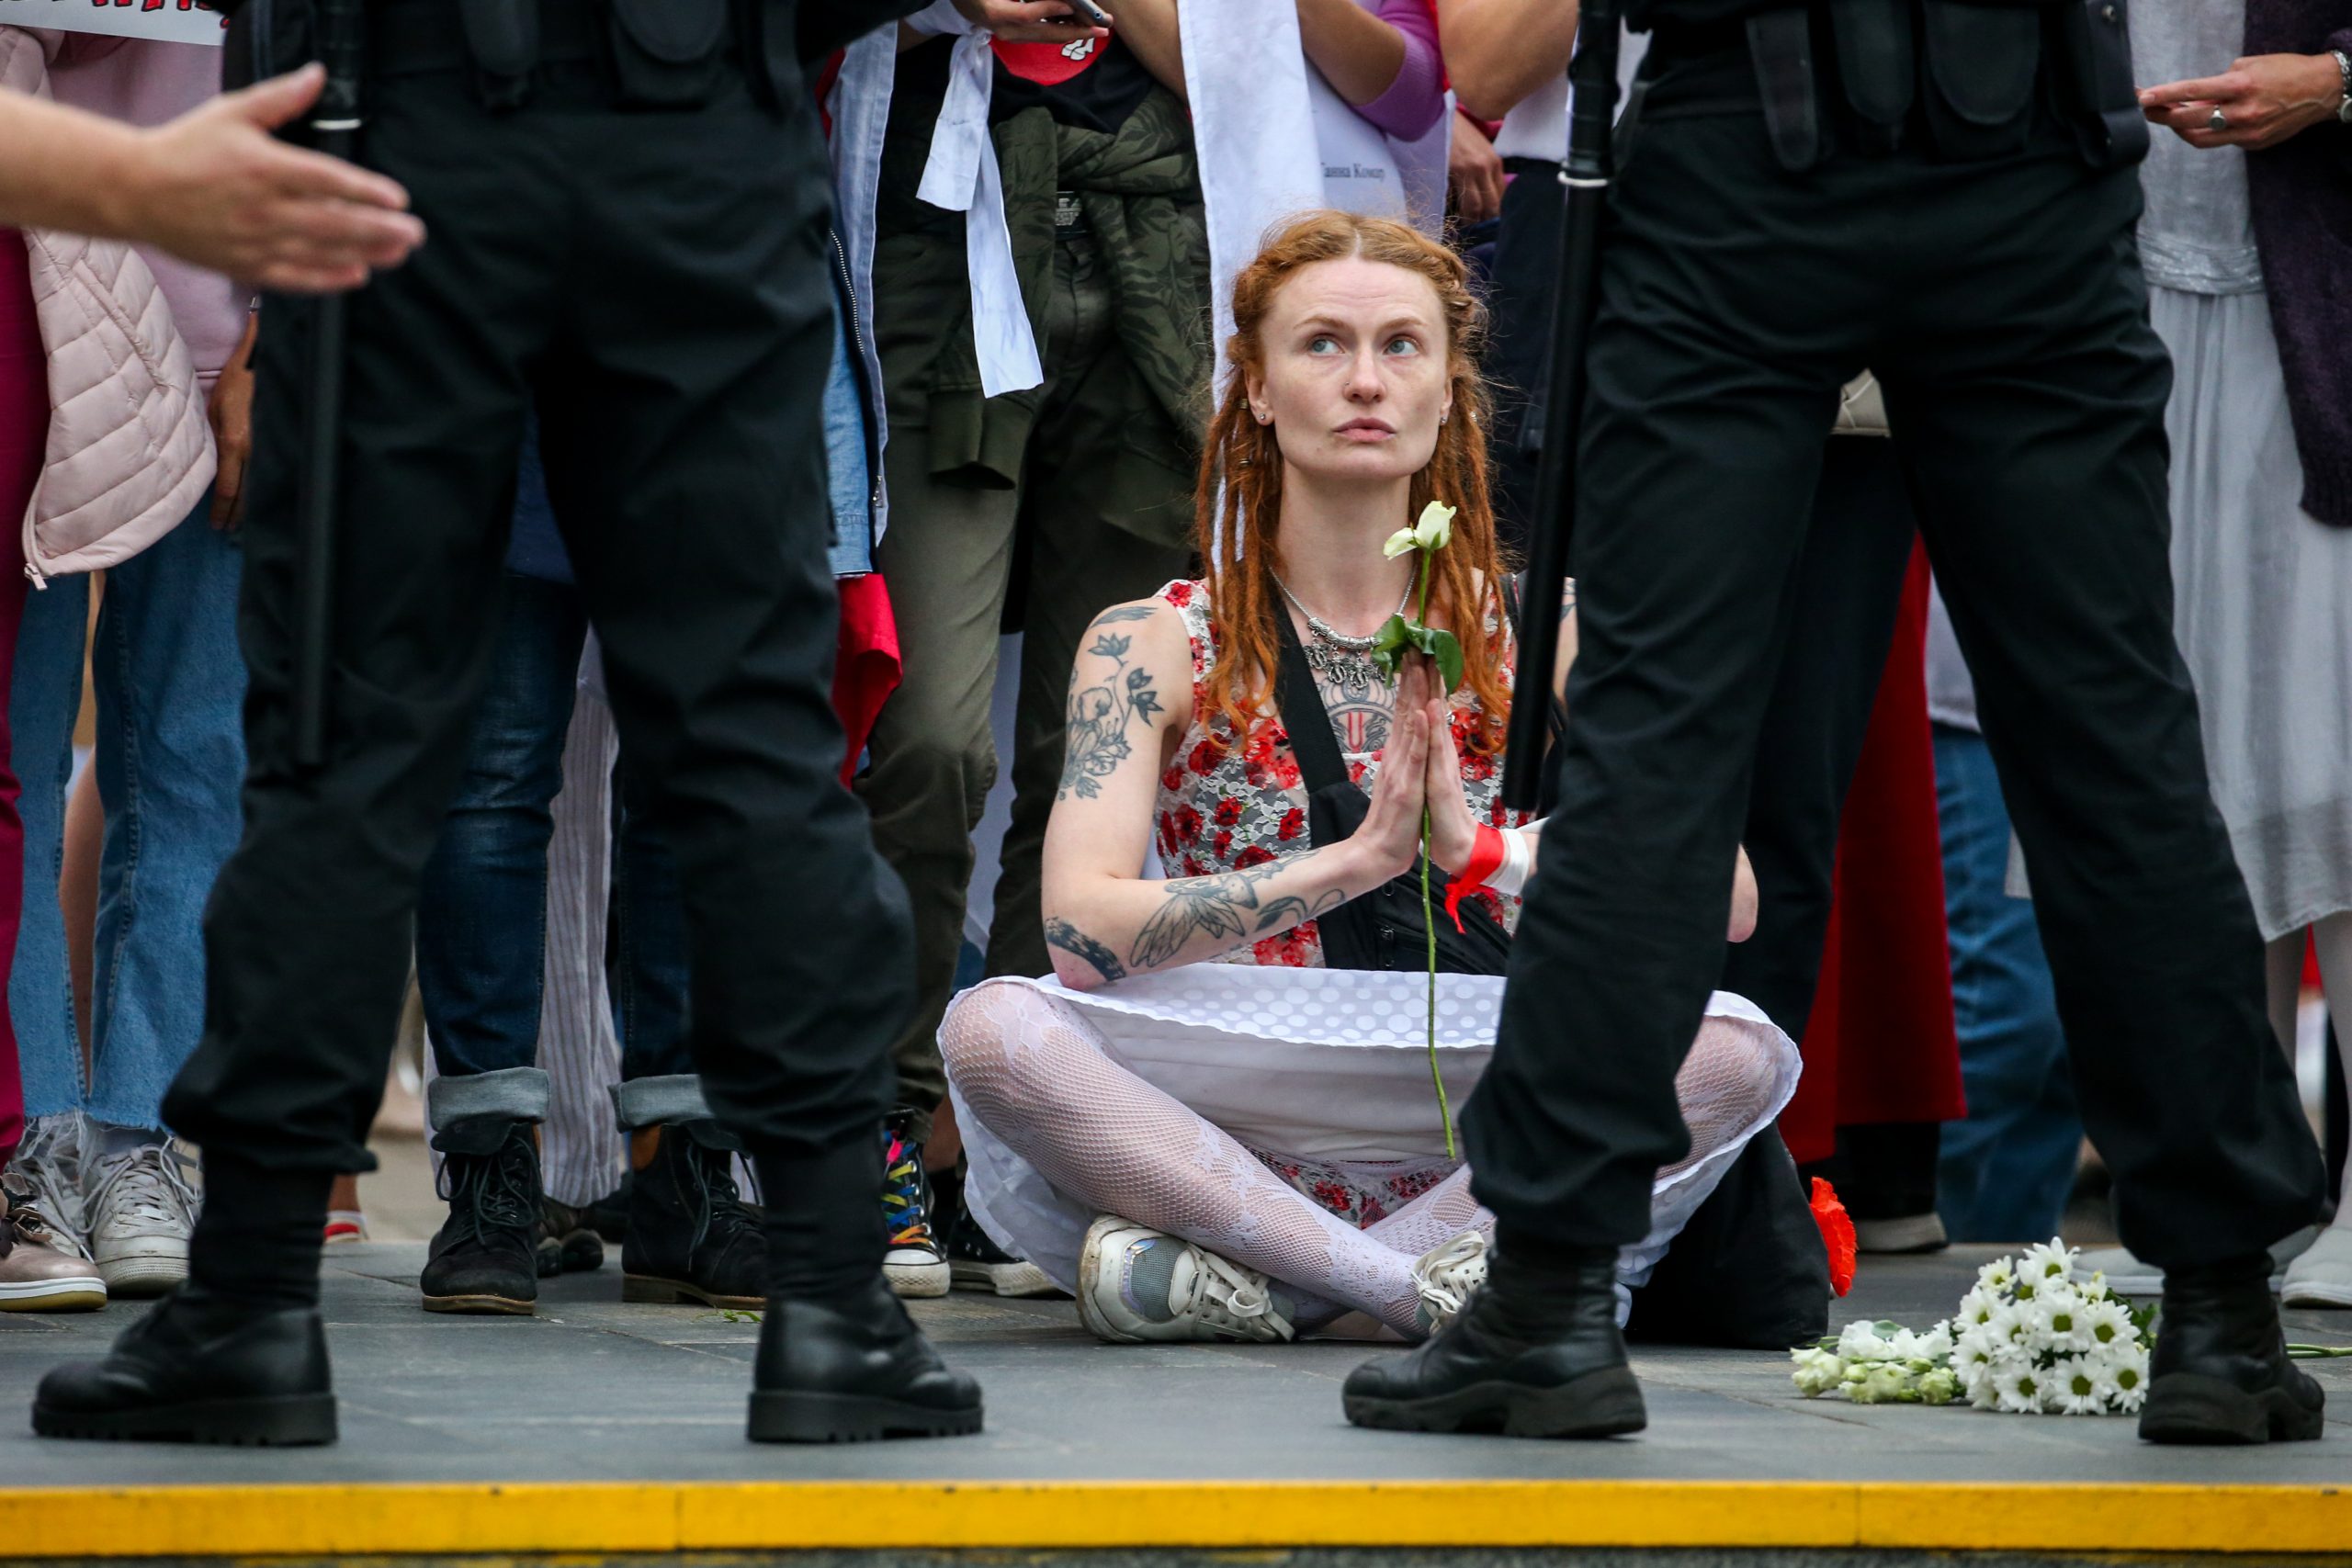 Видимо, таким жестом девушка хочет сдержать силовиков. Фото Natalia Fedosenko/TASS/Scanpix/Leta